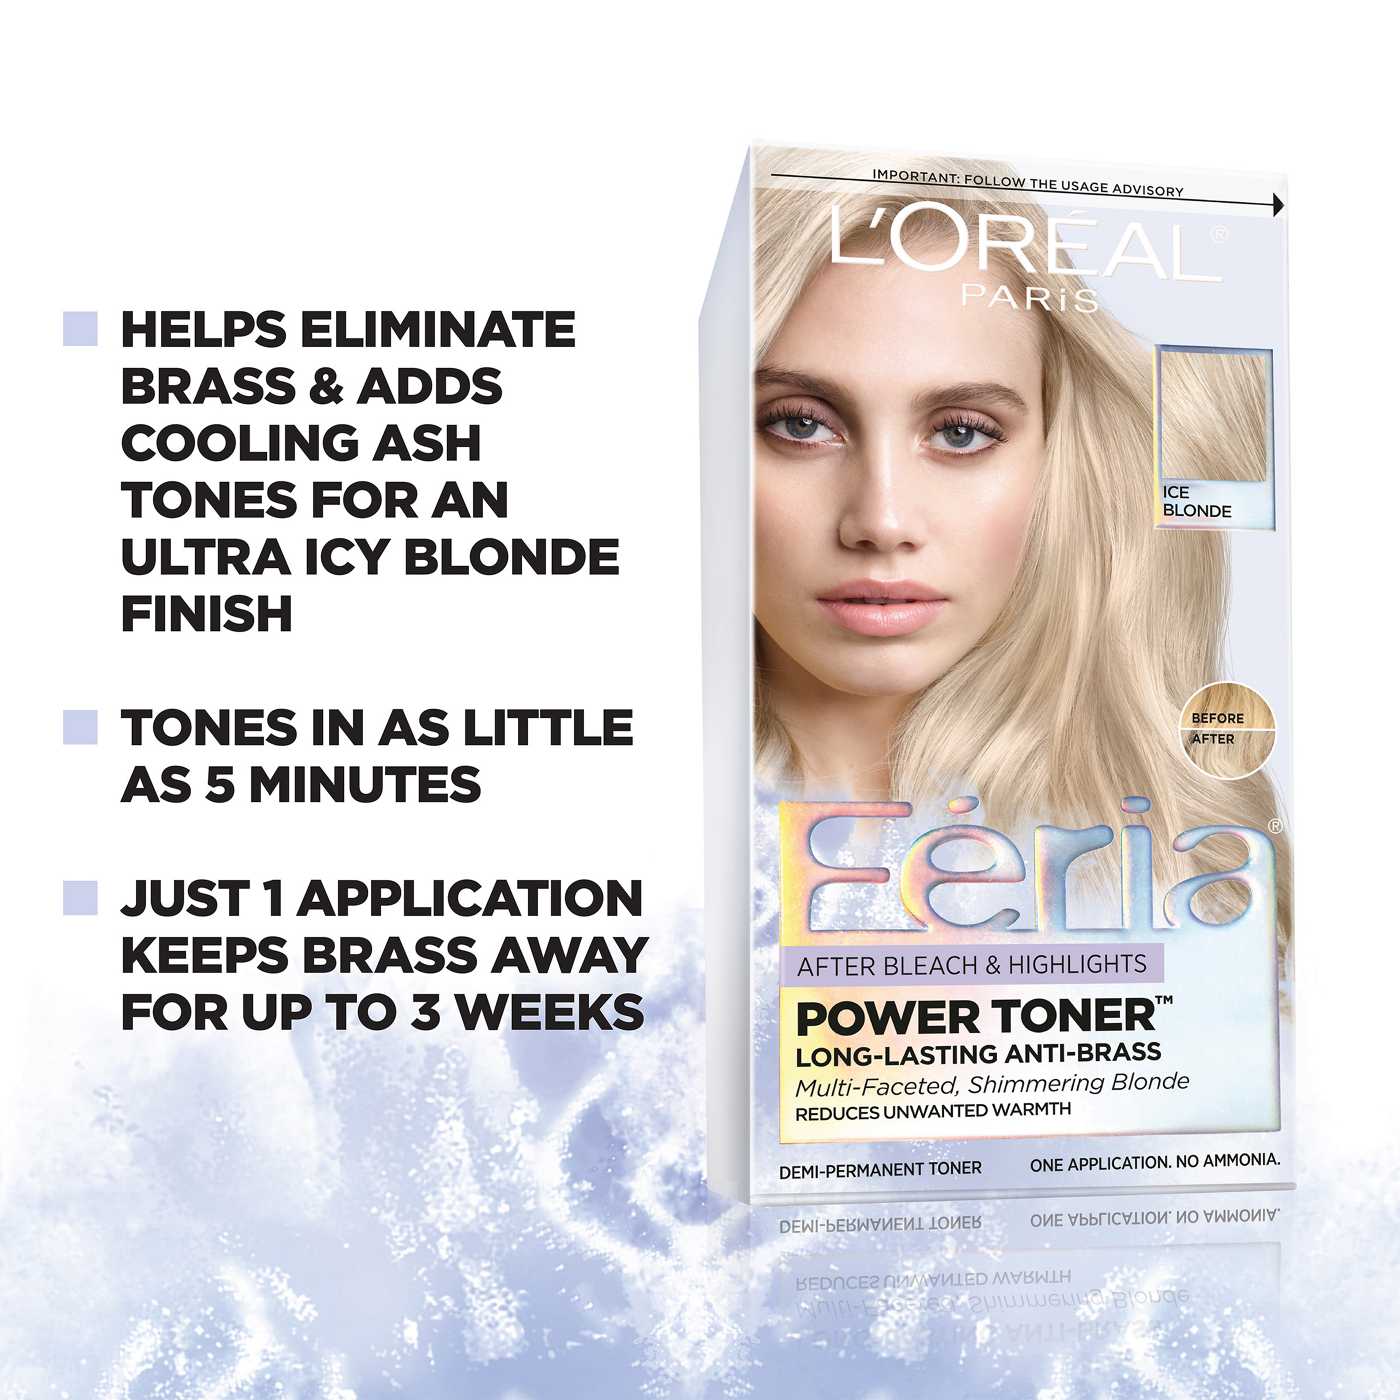 L'Oréal Paris Feria Power Toner - Ice Blonde; image 3 of 7